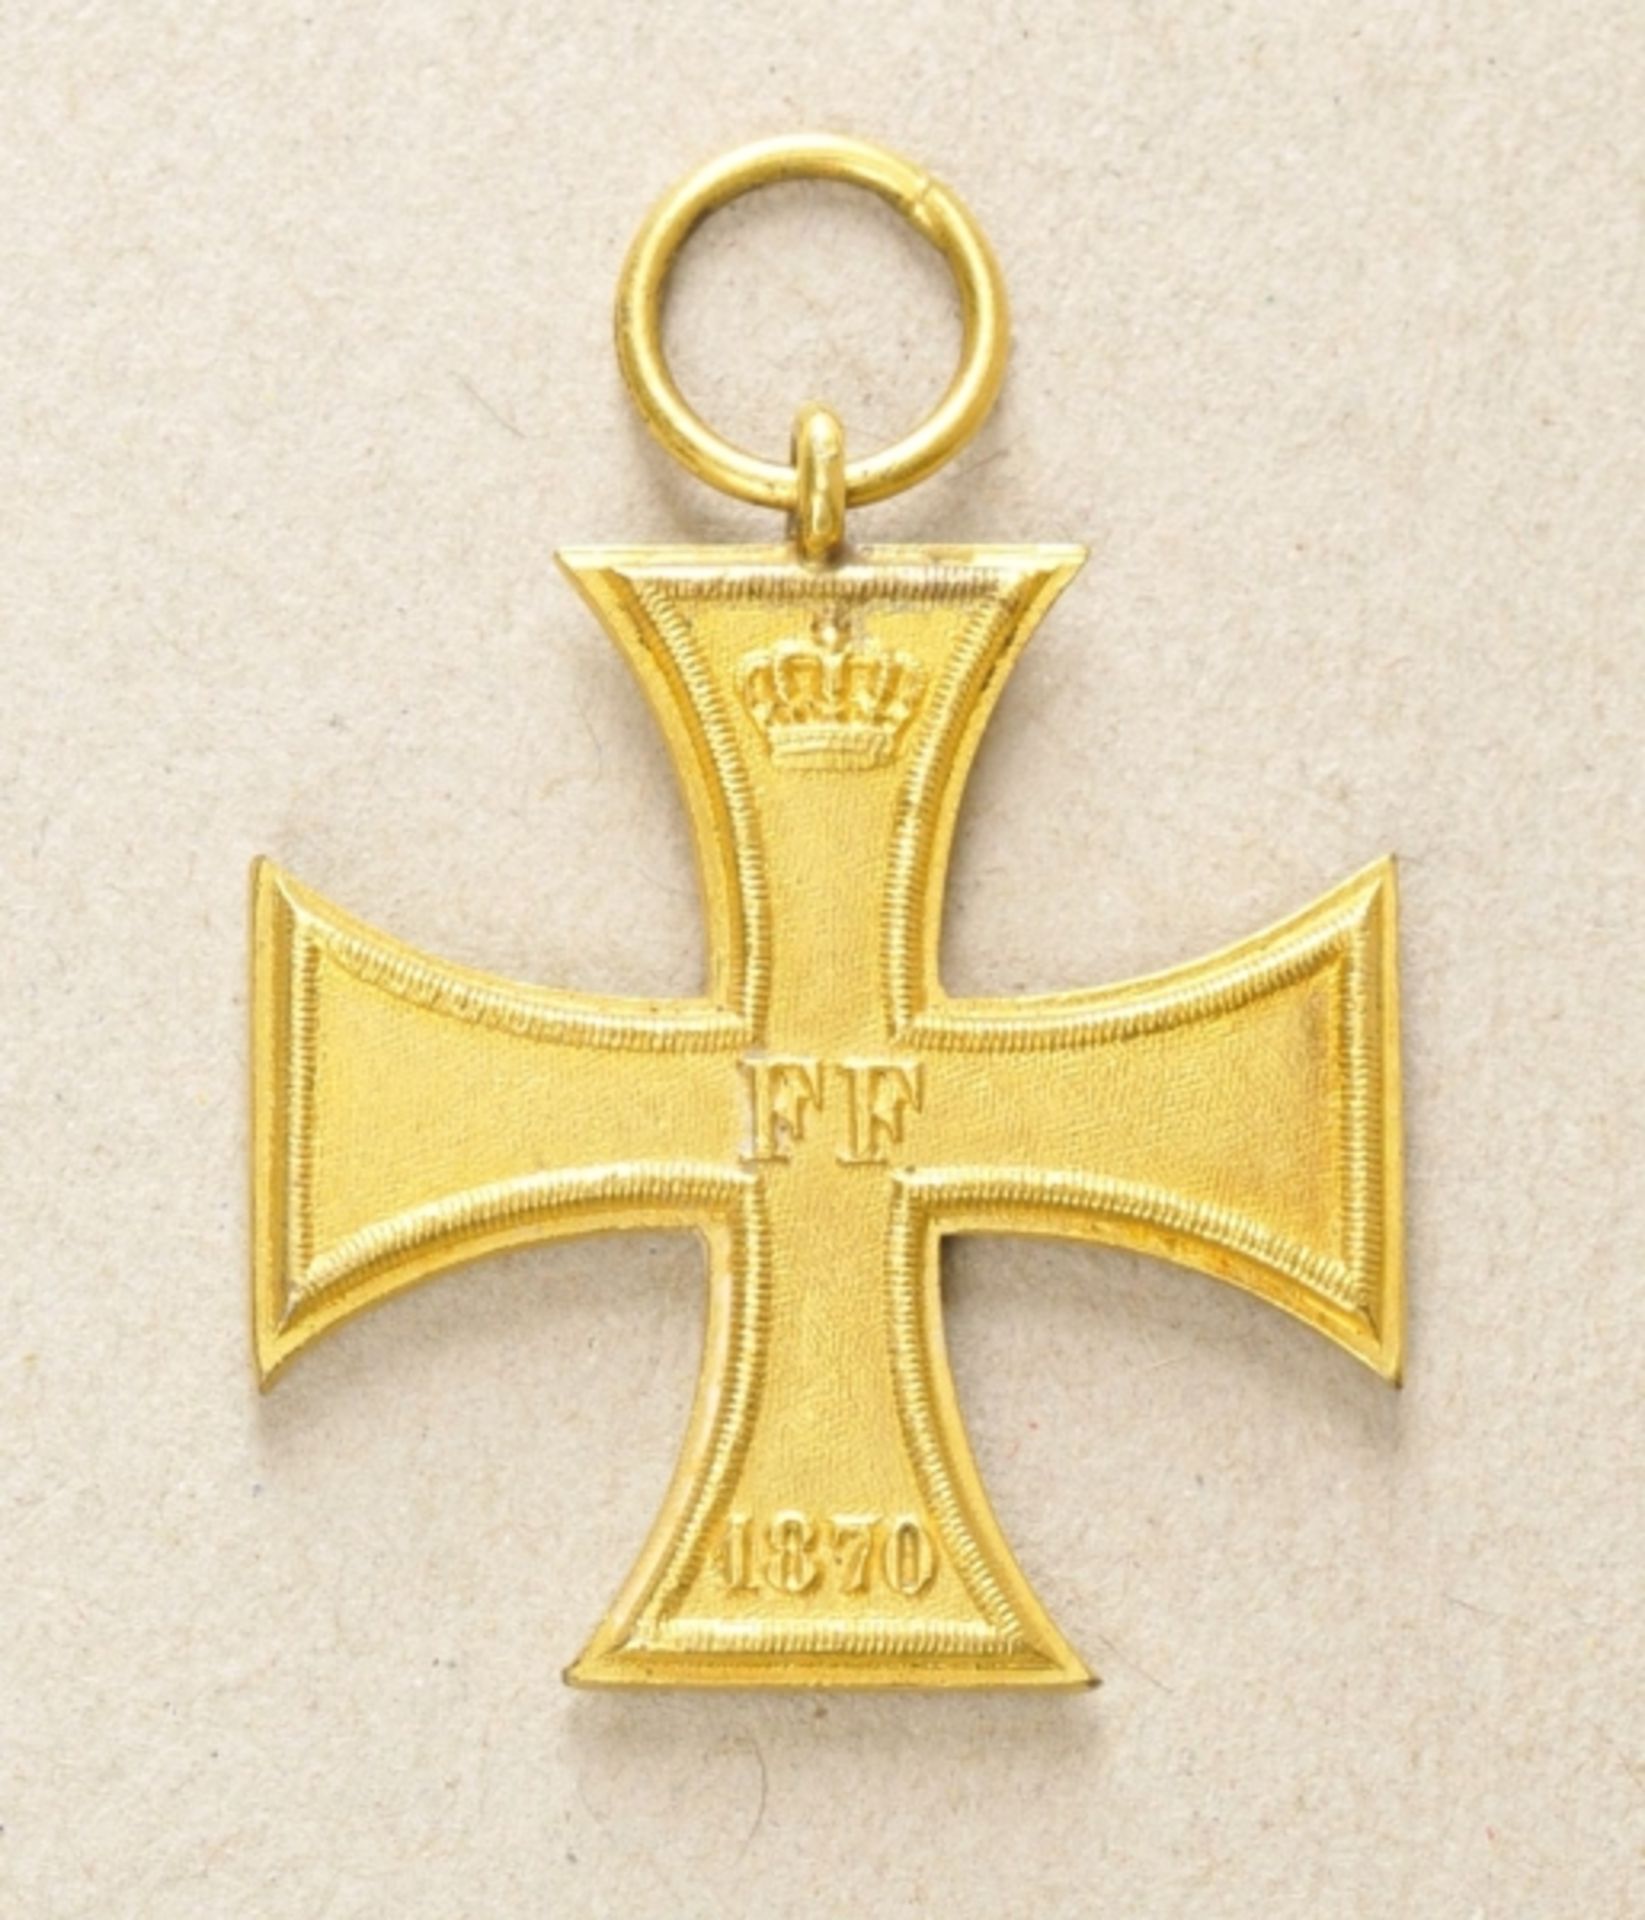 Mecklenburg-Schwerin: Cross of Merit 1870, on ribbon. Bronze, gilded. Awarded original. Condition: